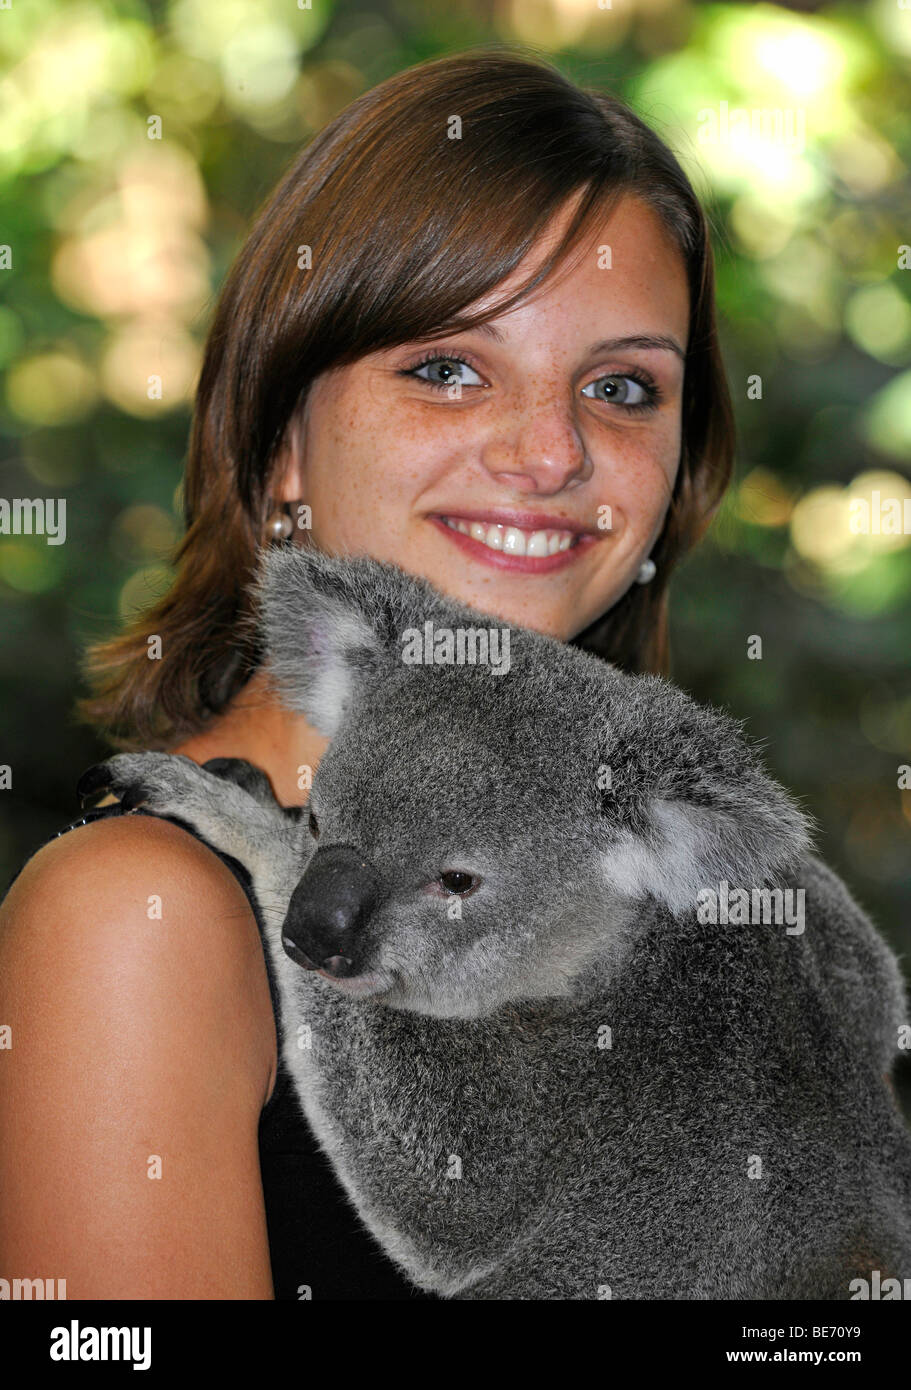 Girl carrying a koala (Phascolarctos cinereus), Queensland, Australia Stock Photo